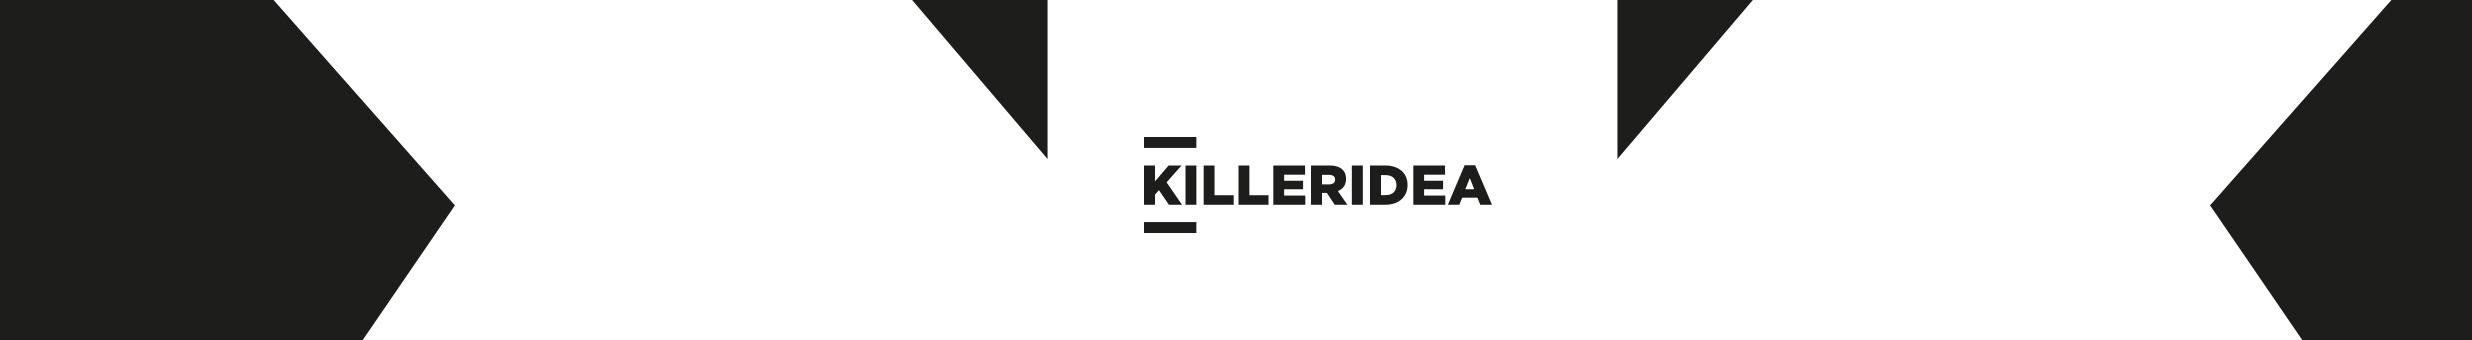 Killeridea creative's profile banner